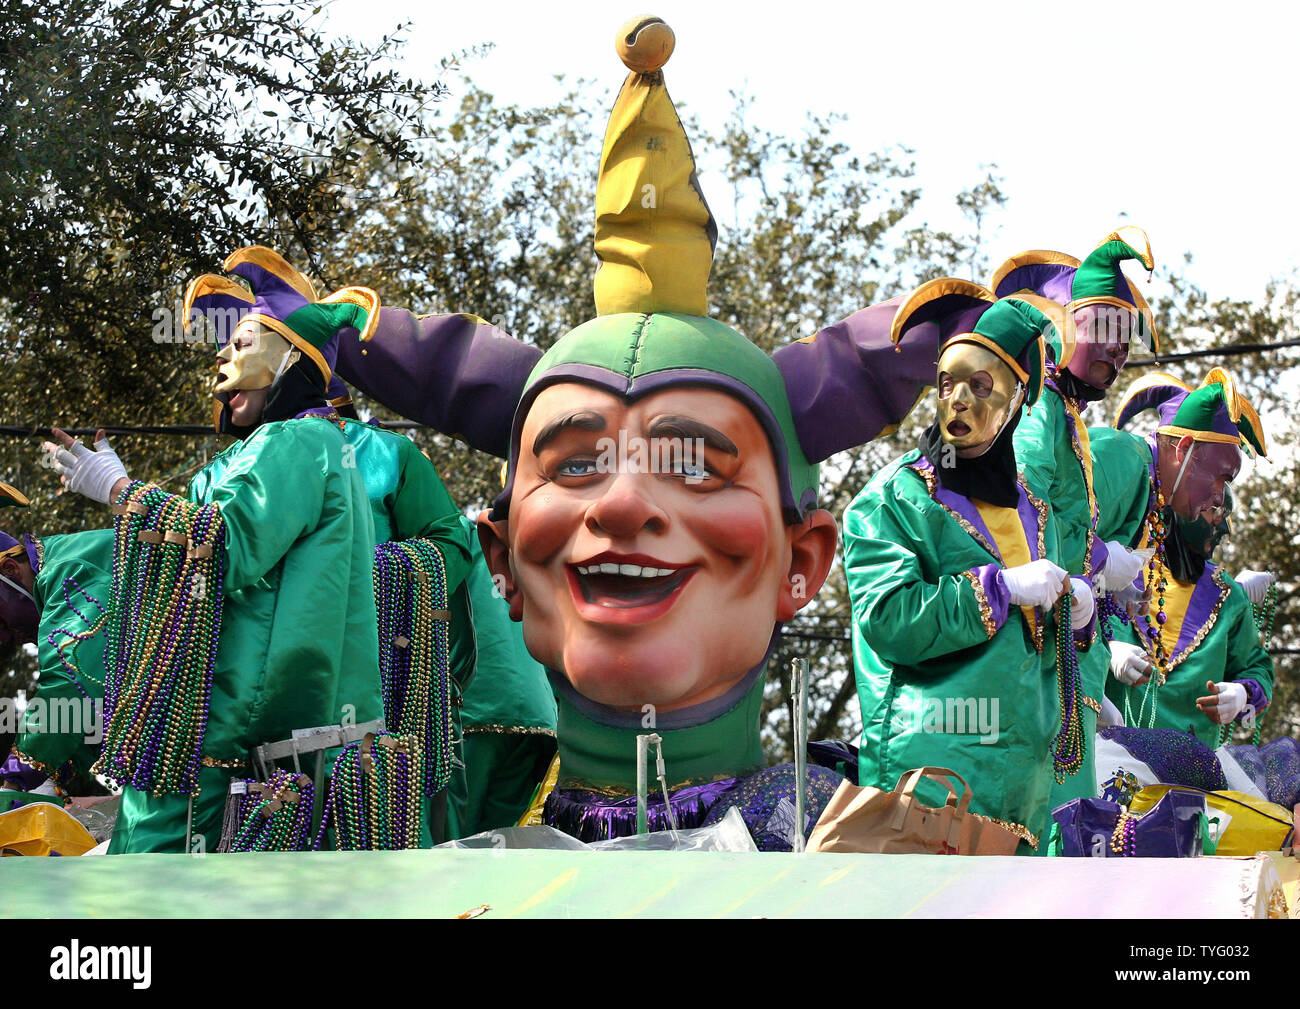 File:Miss Louisiana at New Orleans Mardi Gras 2008.jpg - Wikimedia Commons